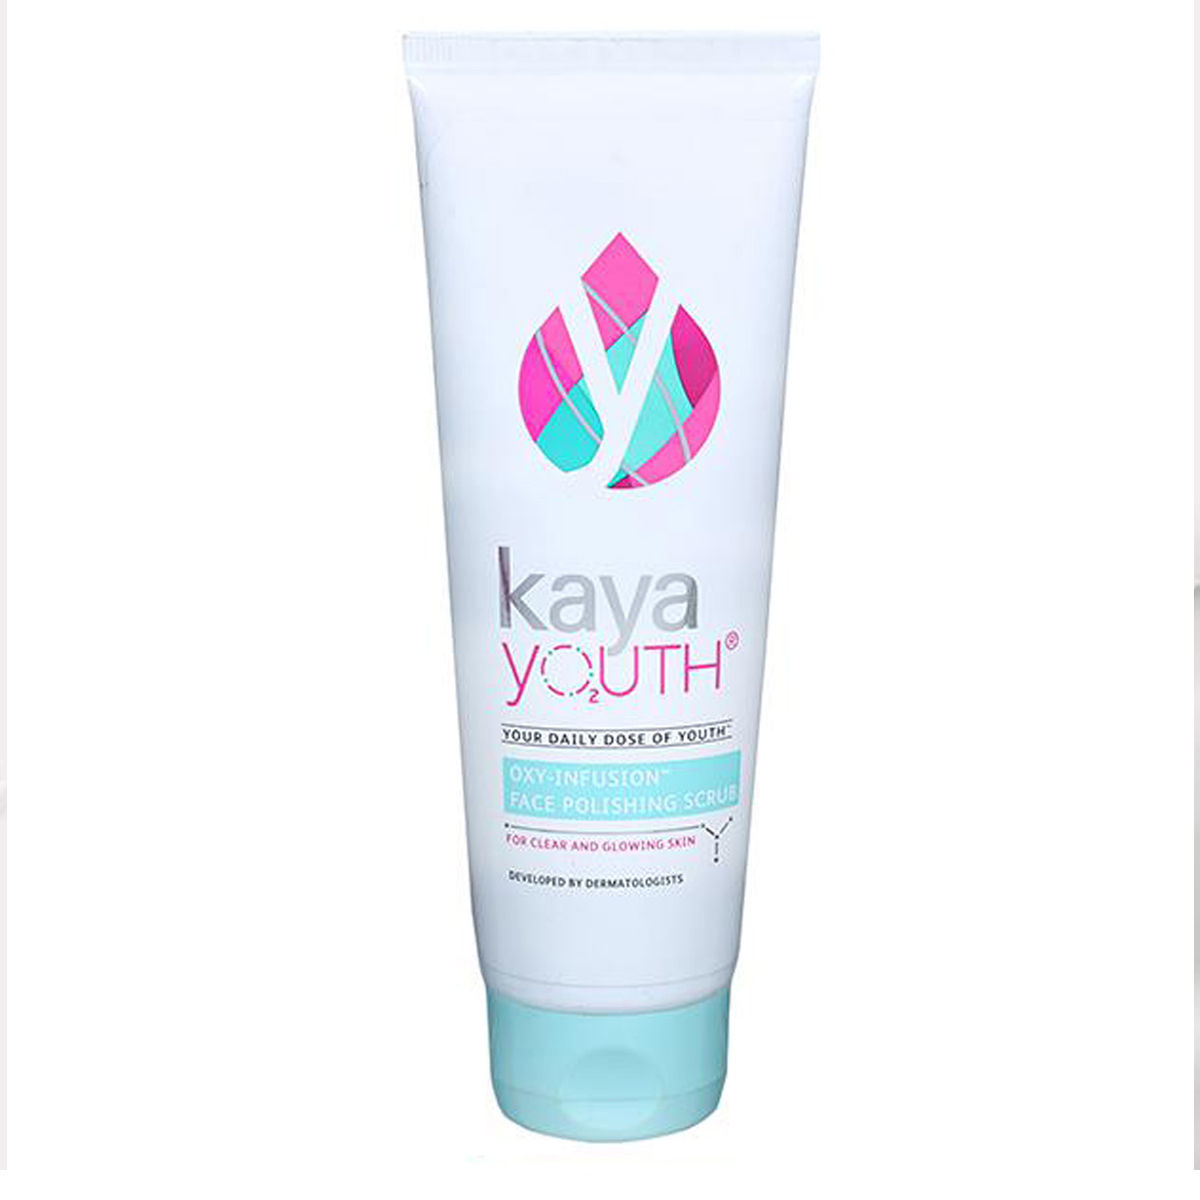 Buy Kaya Youth Oxy-Infusion Face Polishing Scrub, 100 gm Online